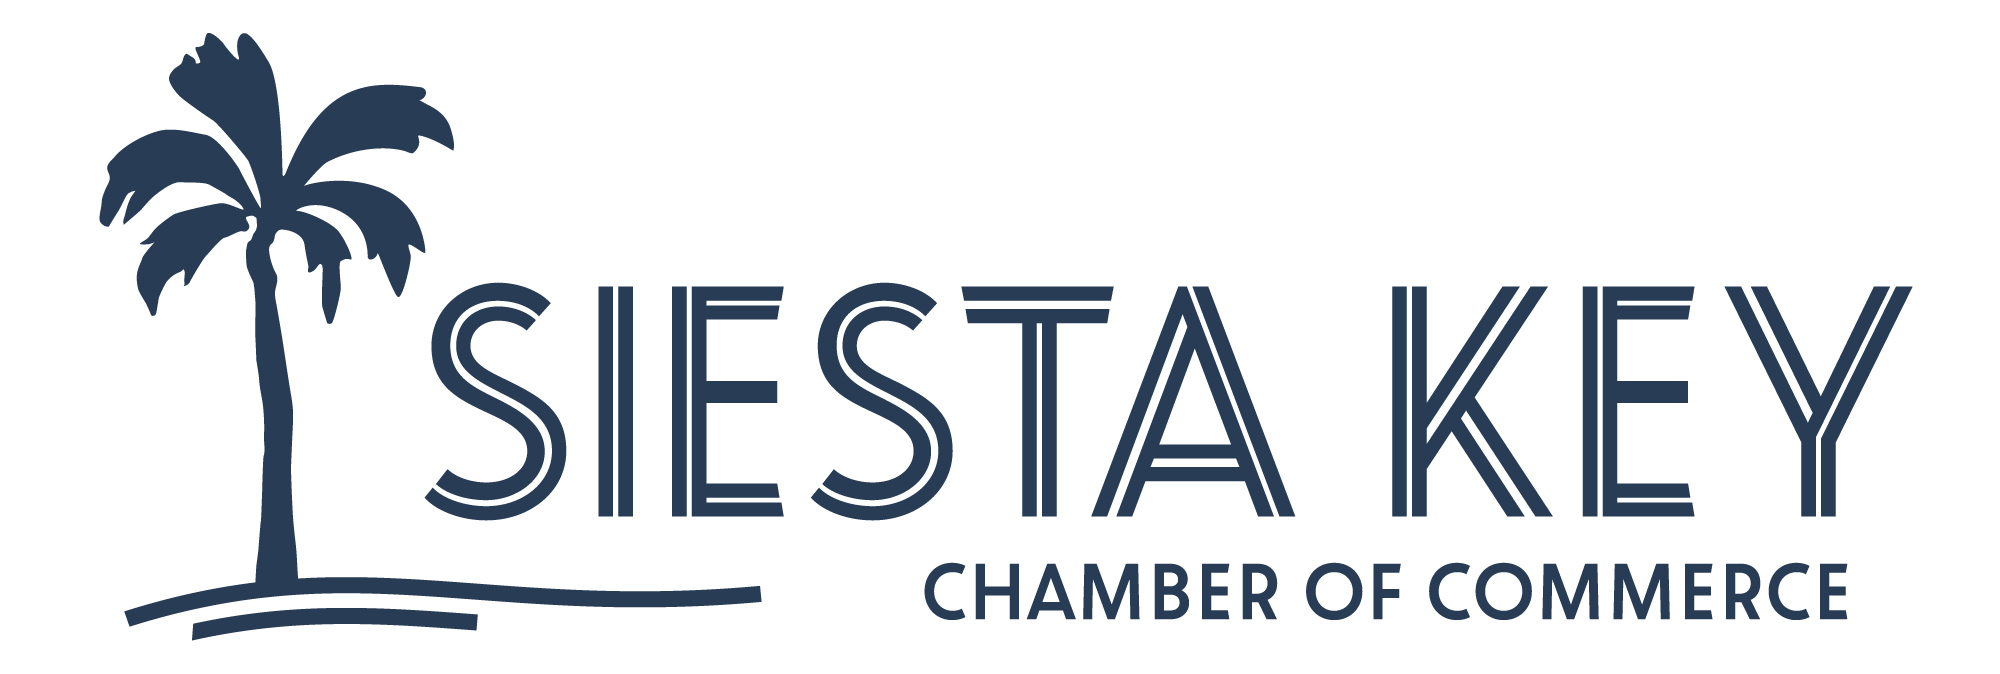 Siesta Key Chamber of Commerce